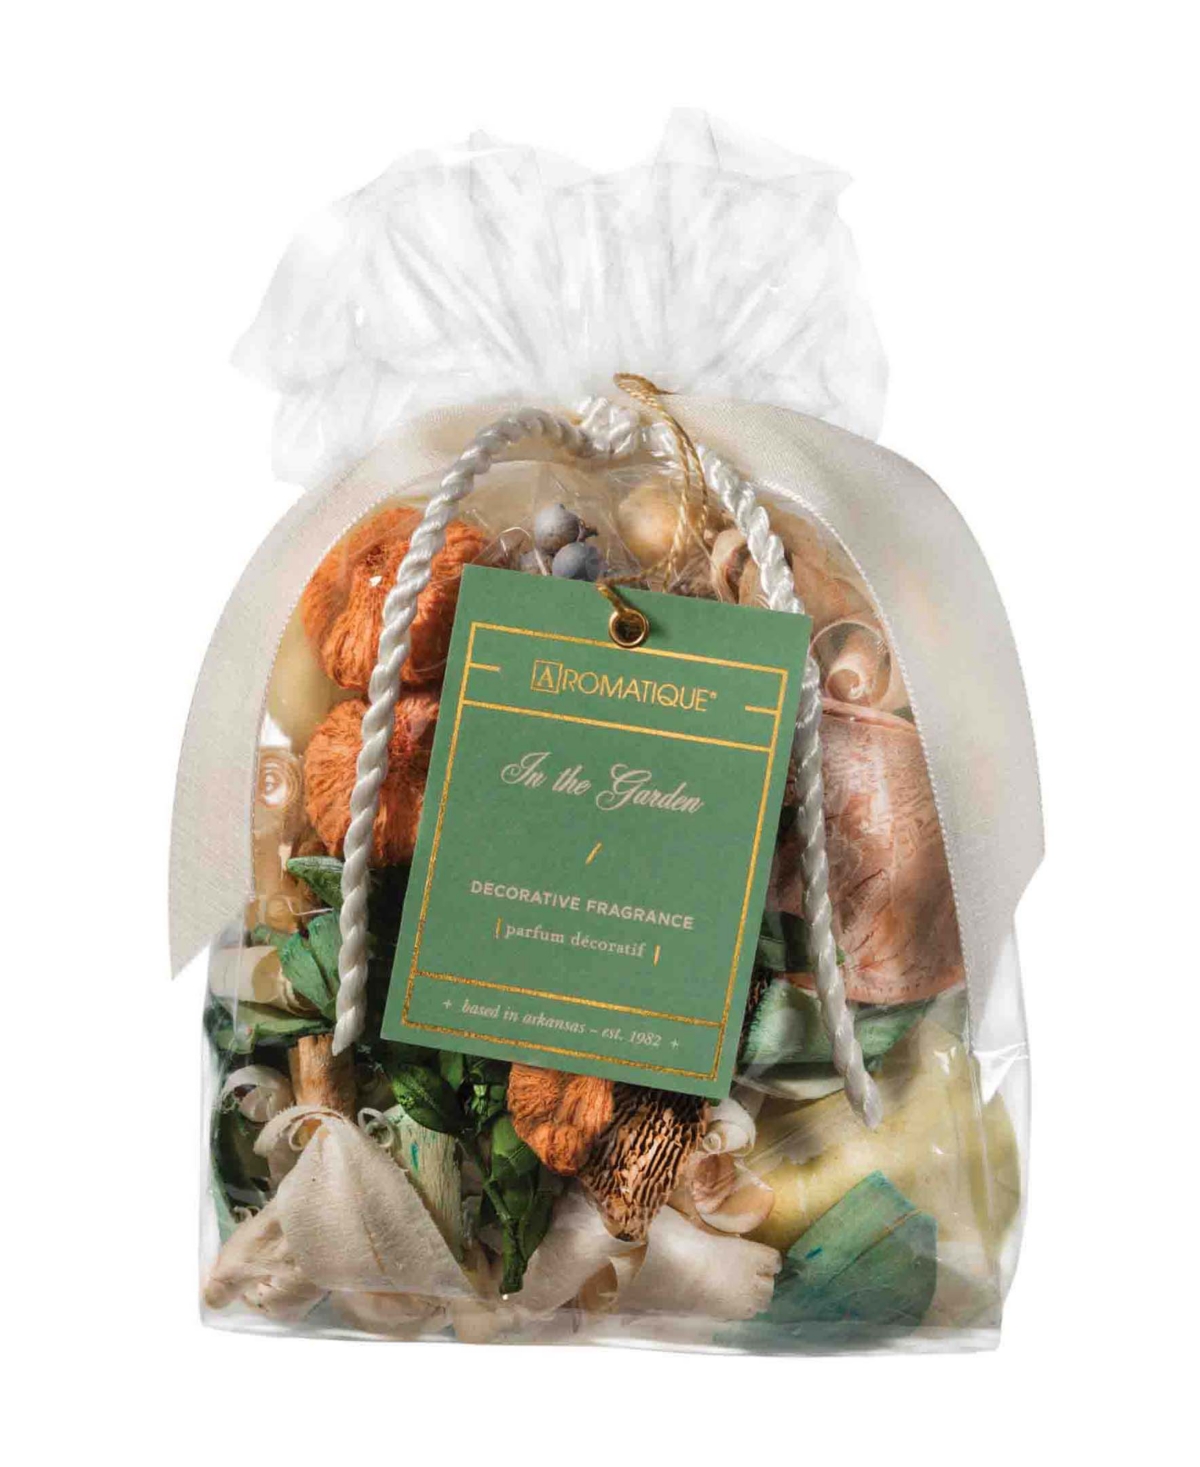 In The Garden Standard Decorative Fragrance Bag